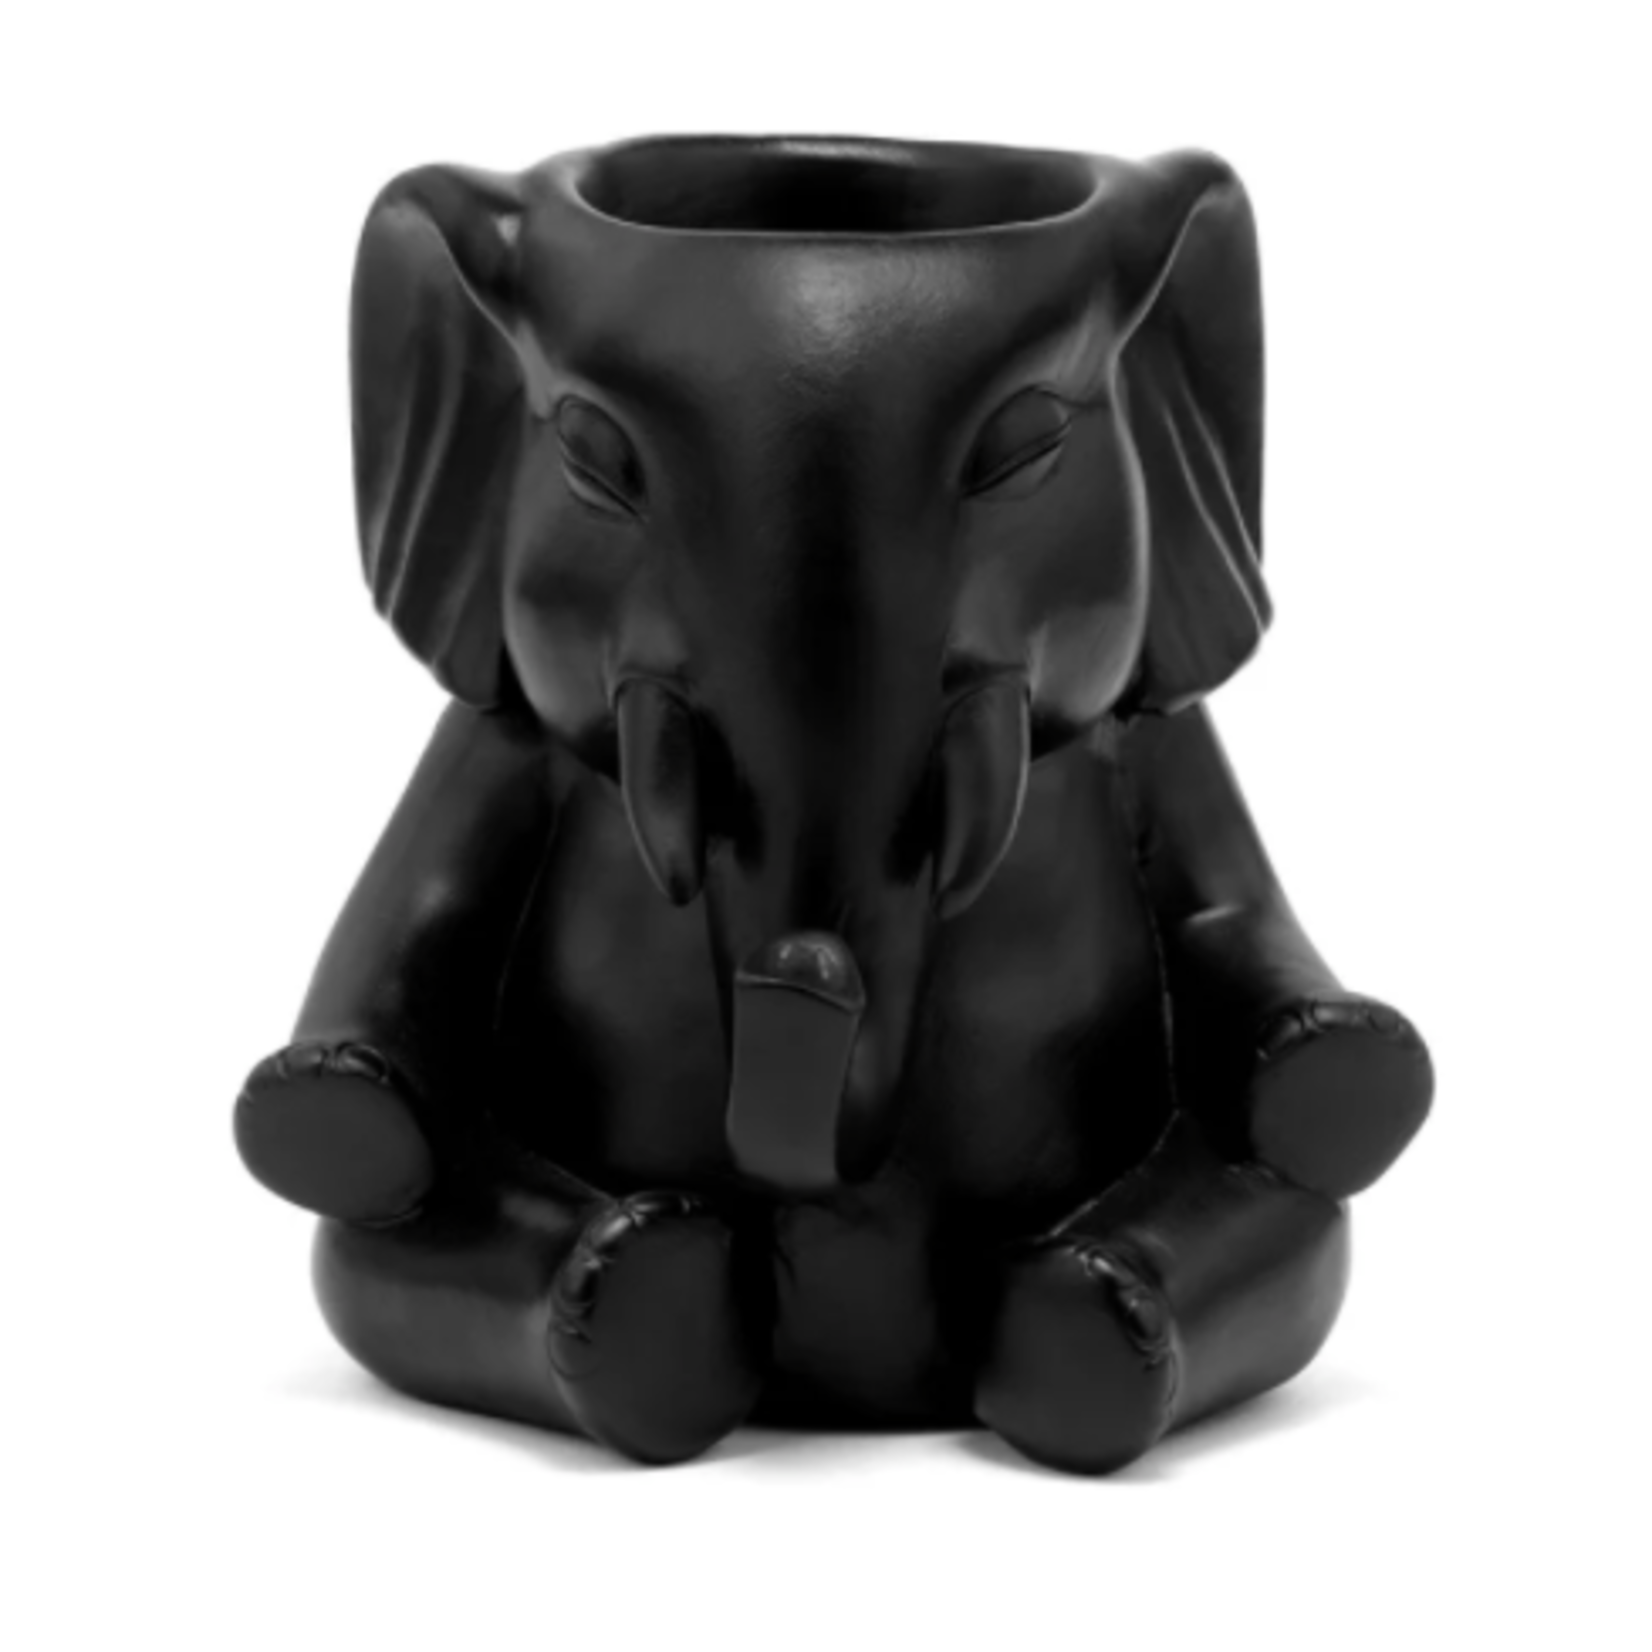 BLACK ELEPHANT PLANTER, reg $19.99